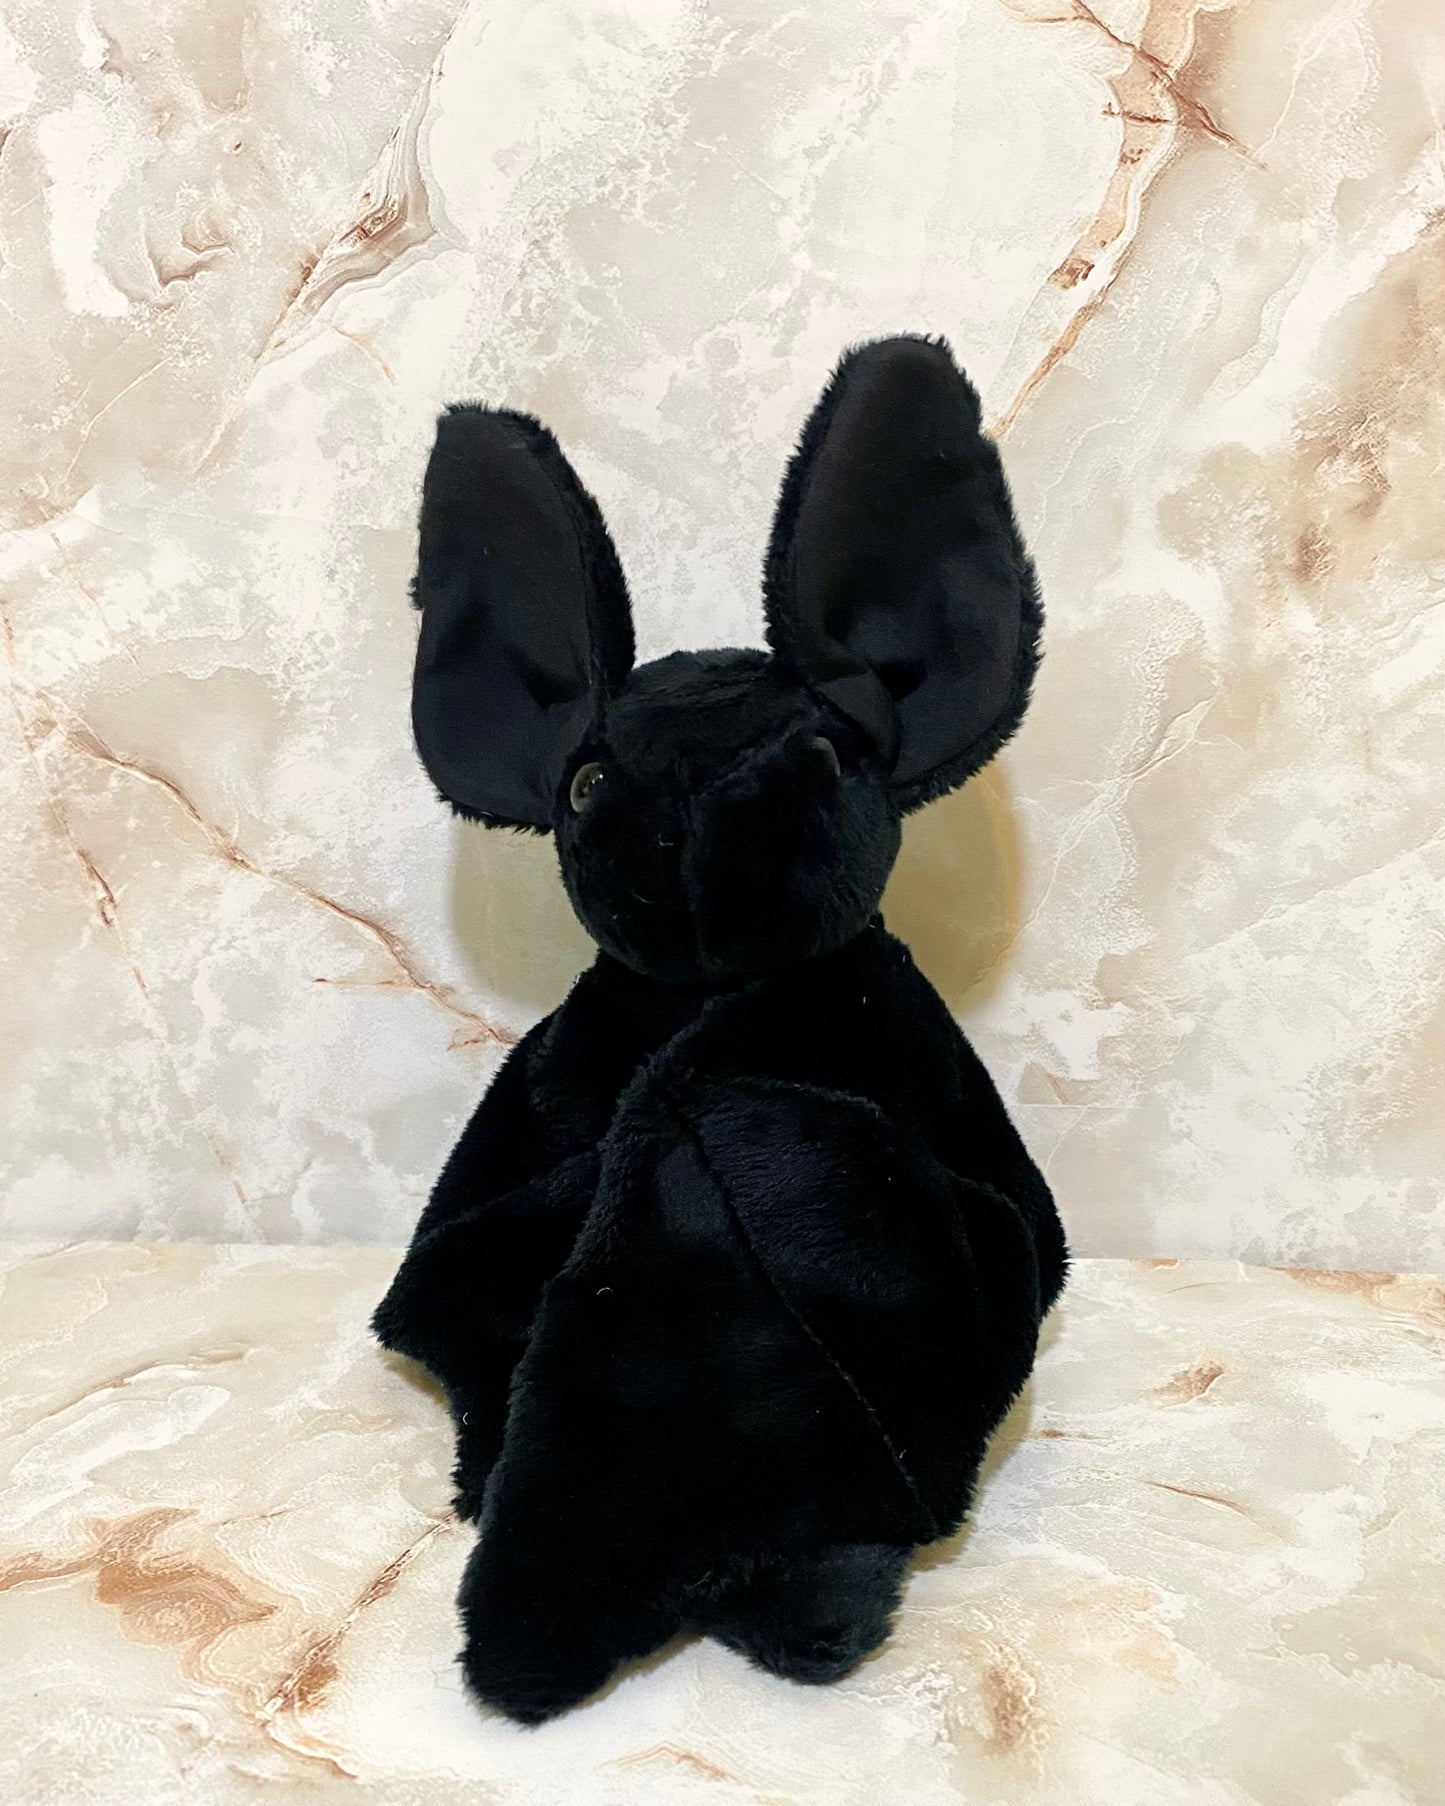 Black Stuffed Plush Bat